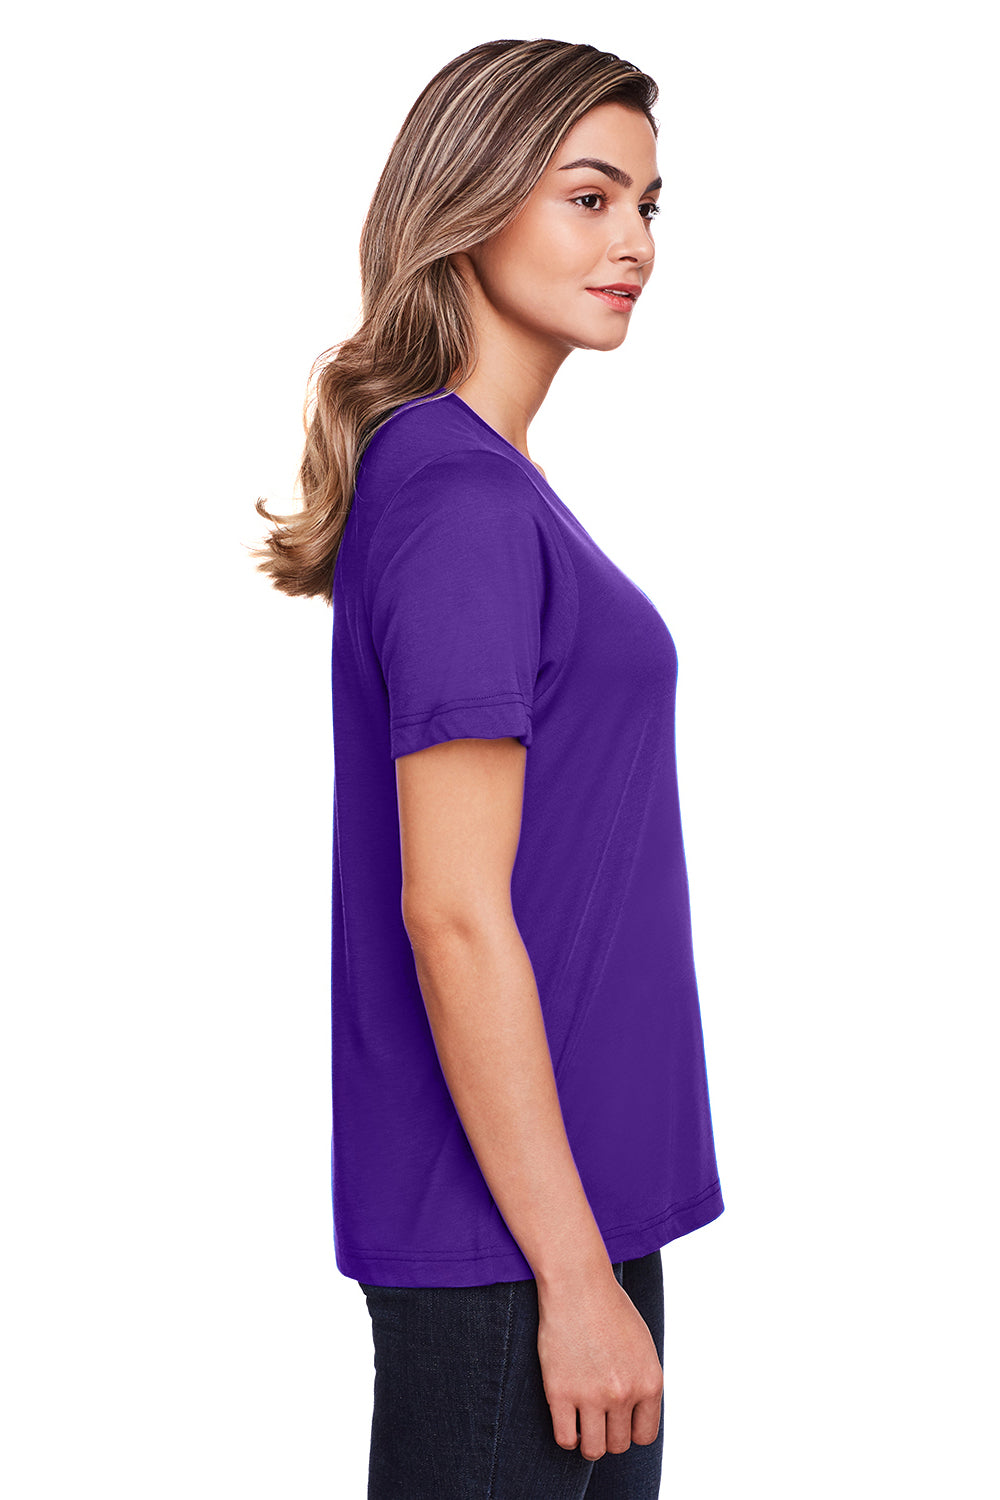 Core 365 CE111W Womens Fusion ChromaSoft Performance Moisture Wicking Short Sleeve Scoop Neck T-Shirt Purple Side